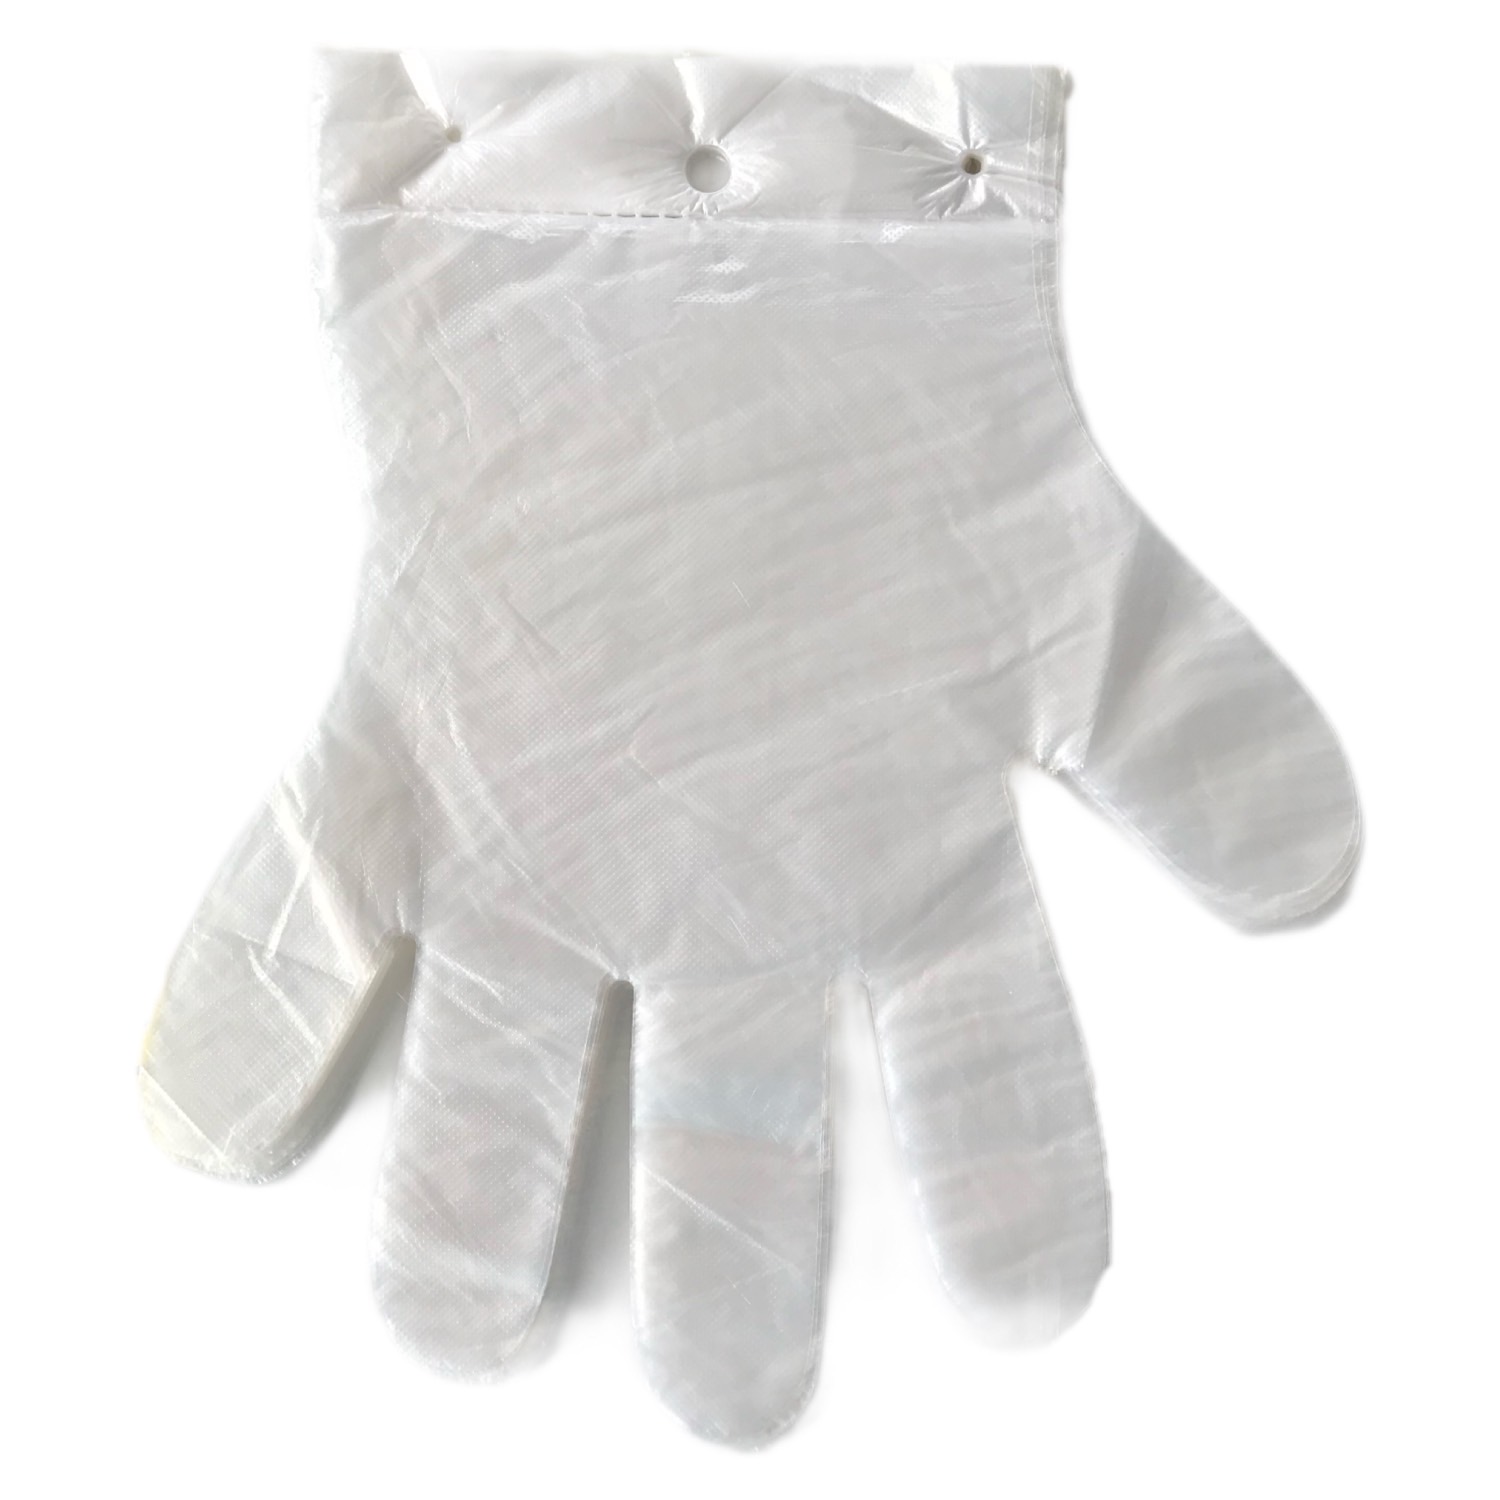 0.8 g de guantes desechables de PE con agujeros